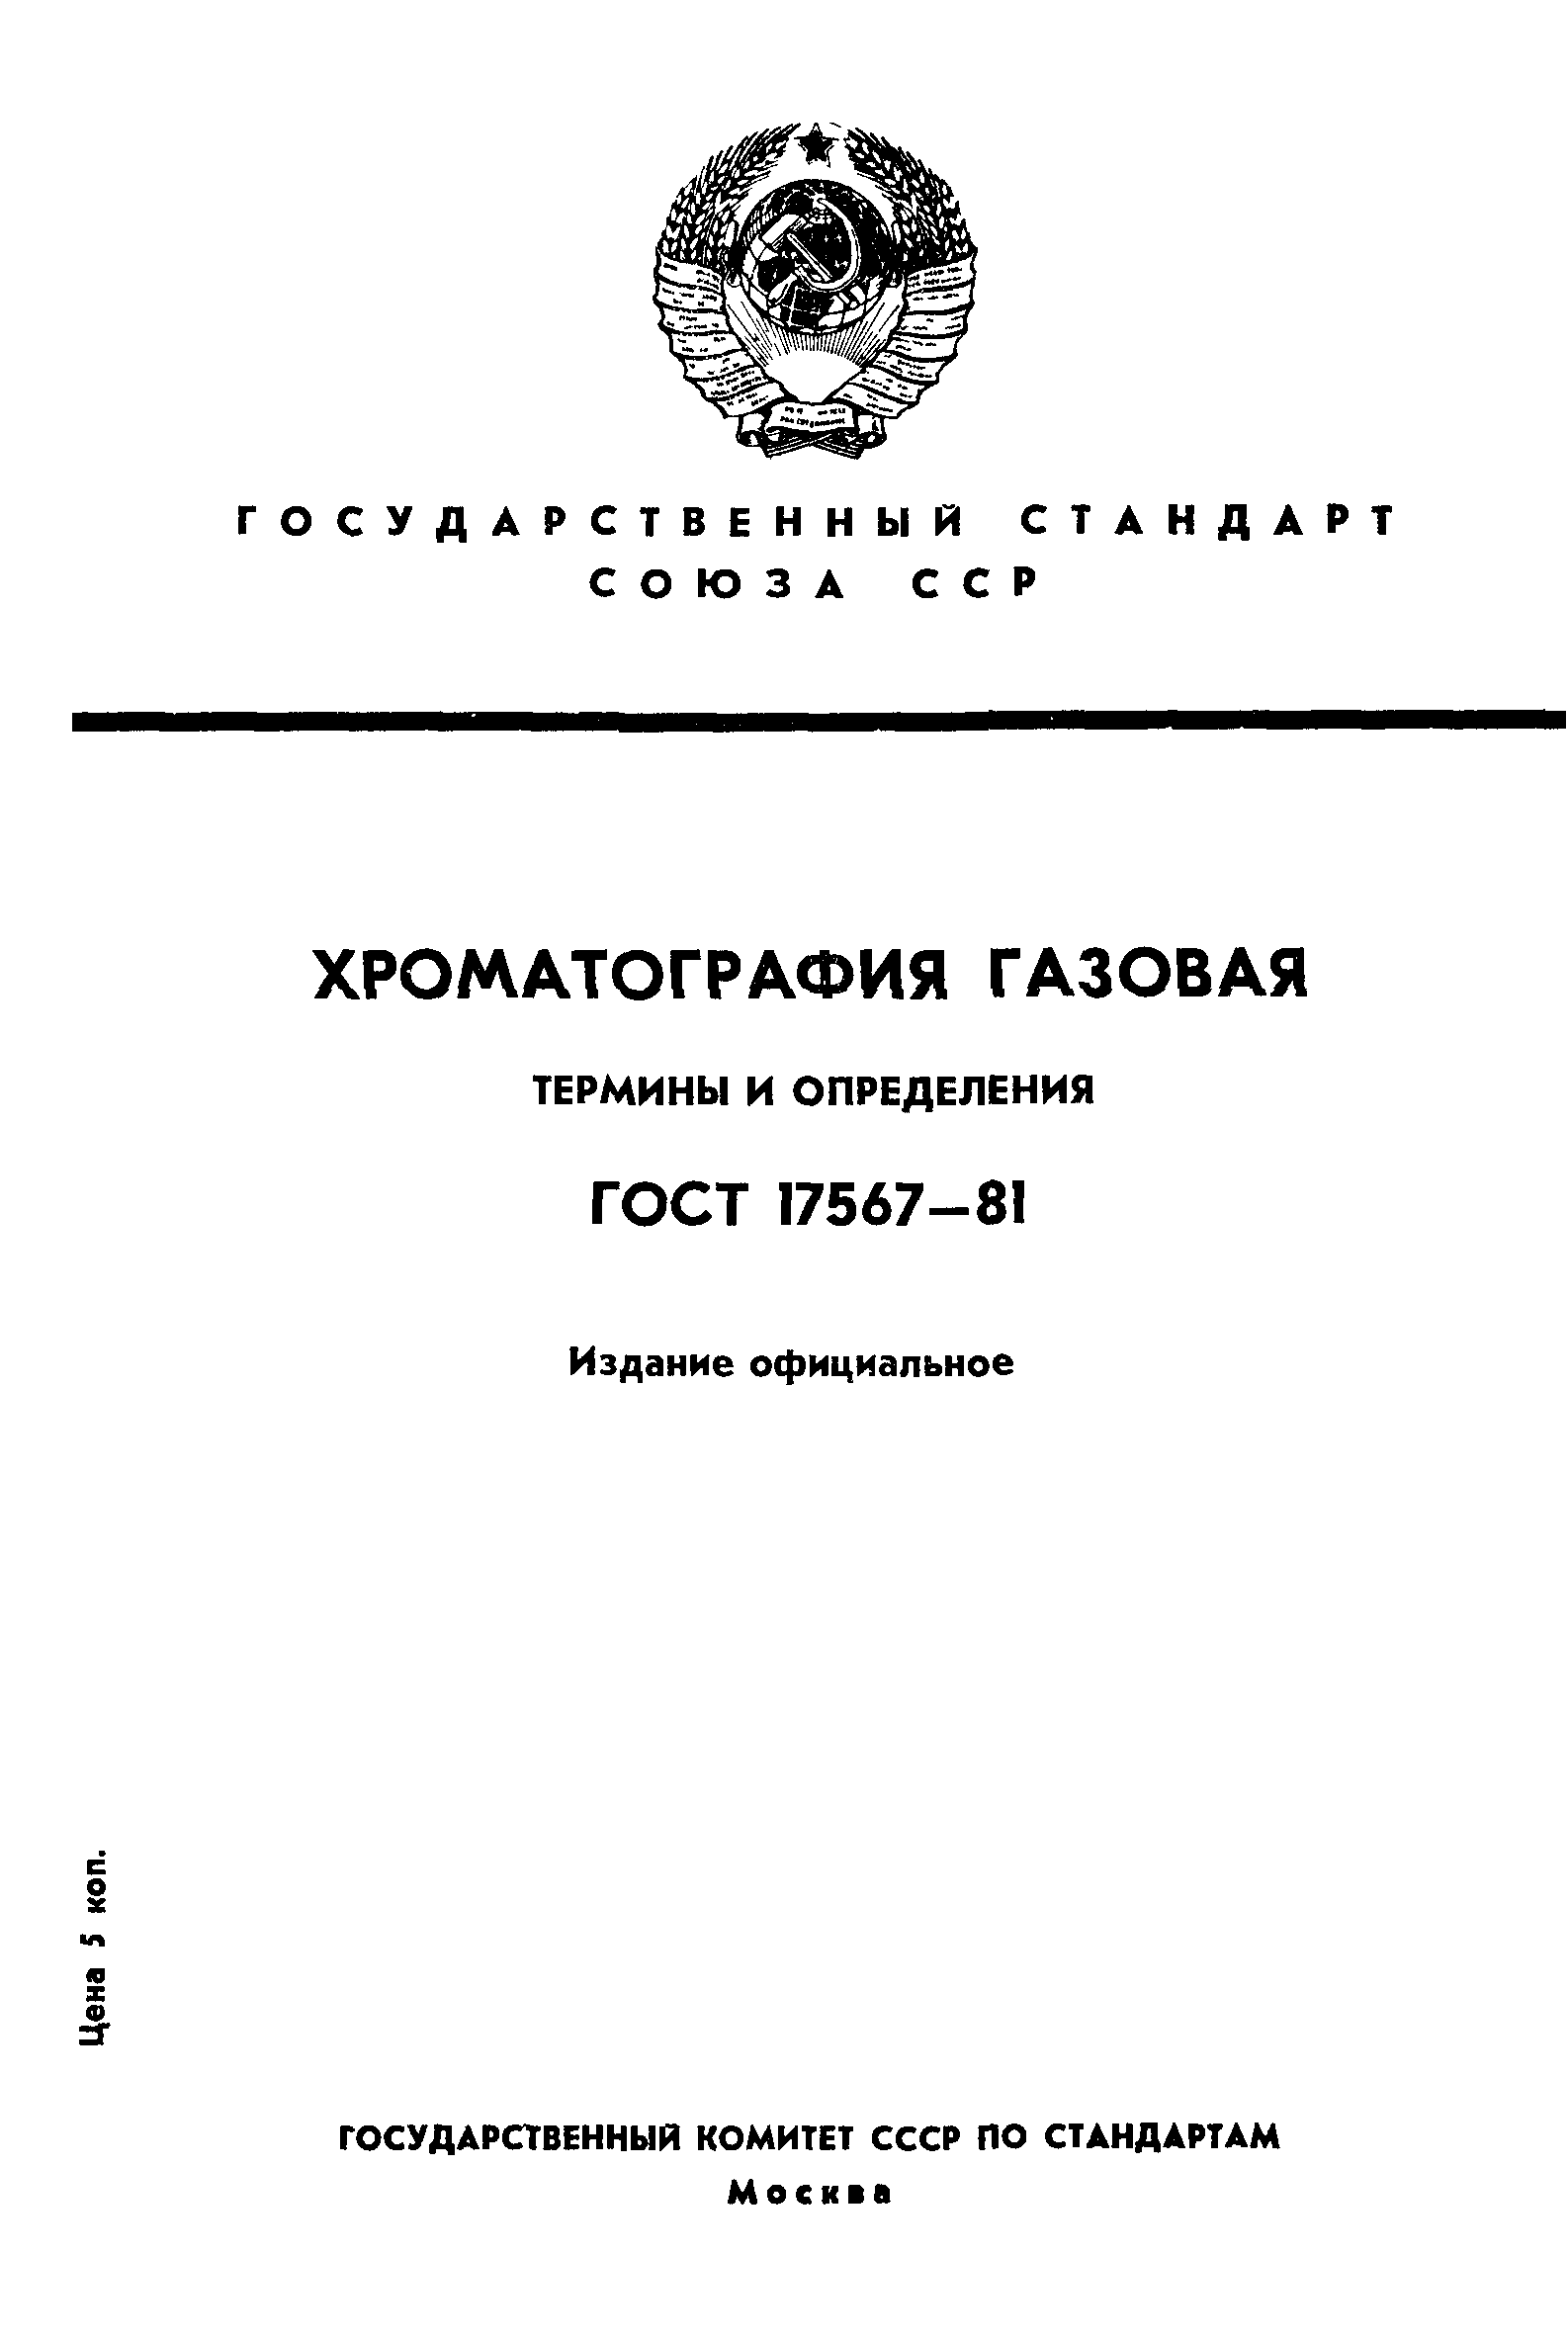 ГОСТ 17567-81